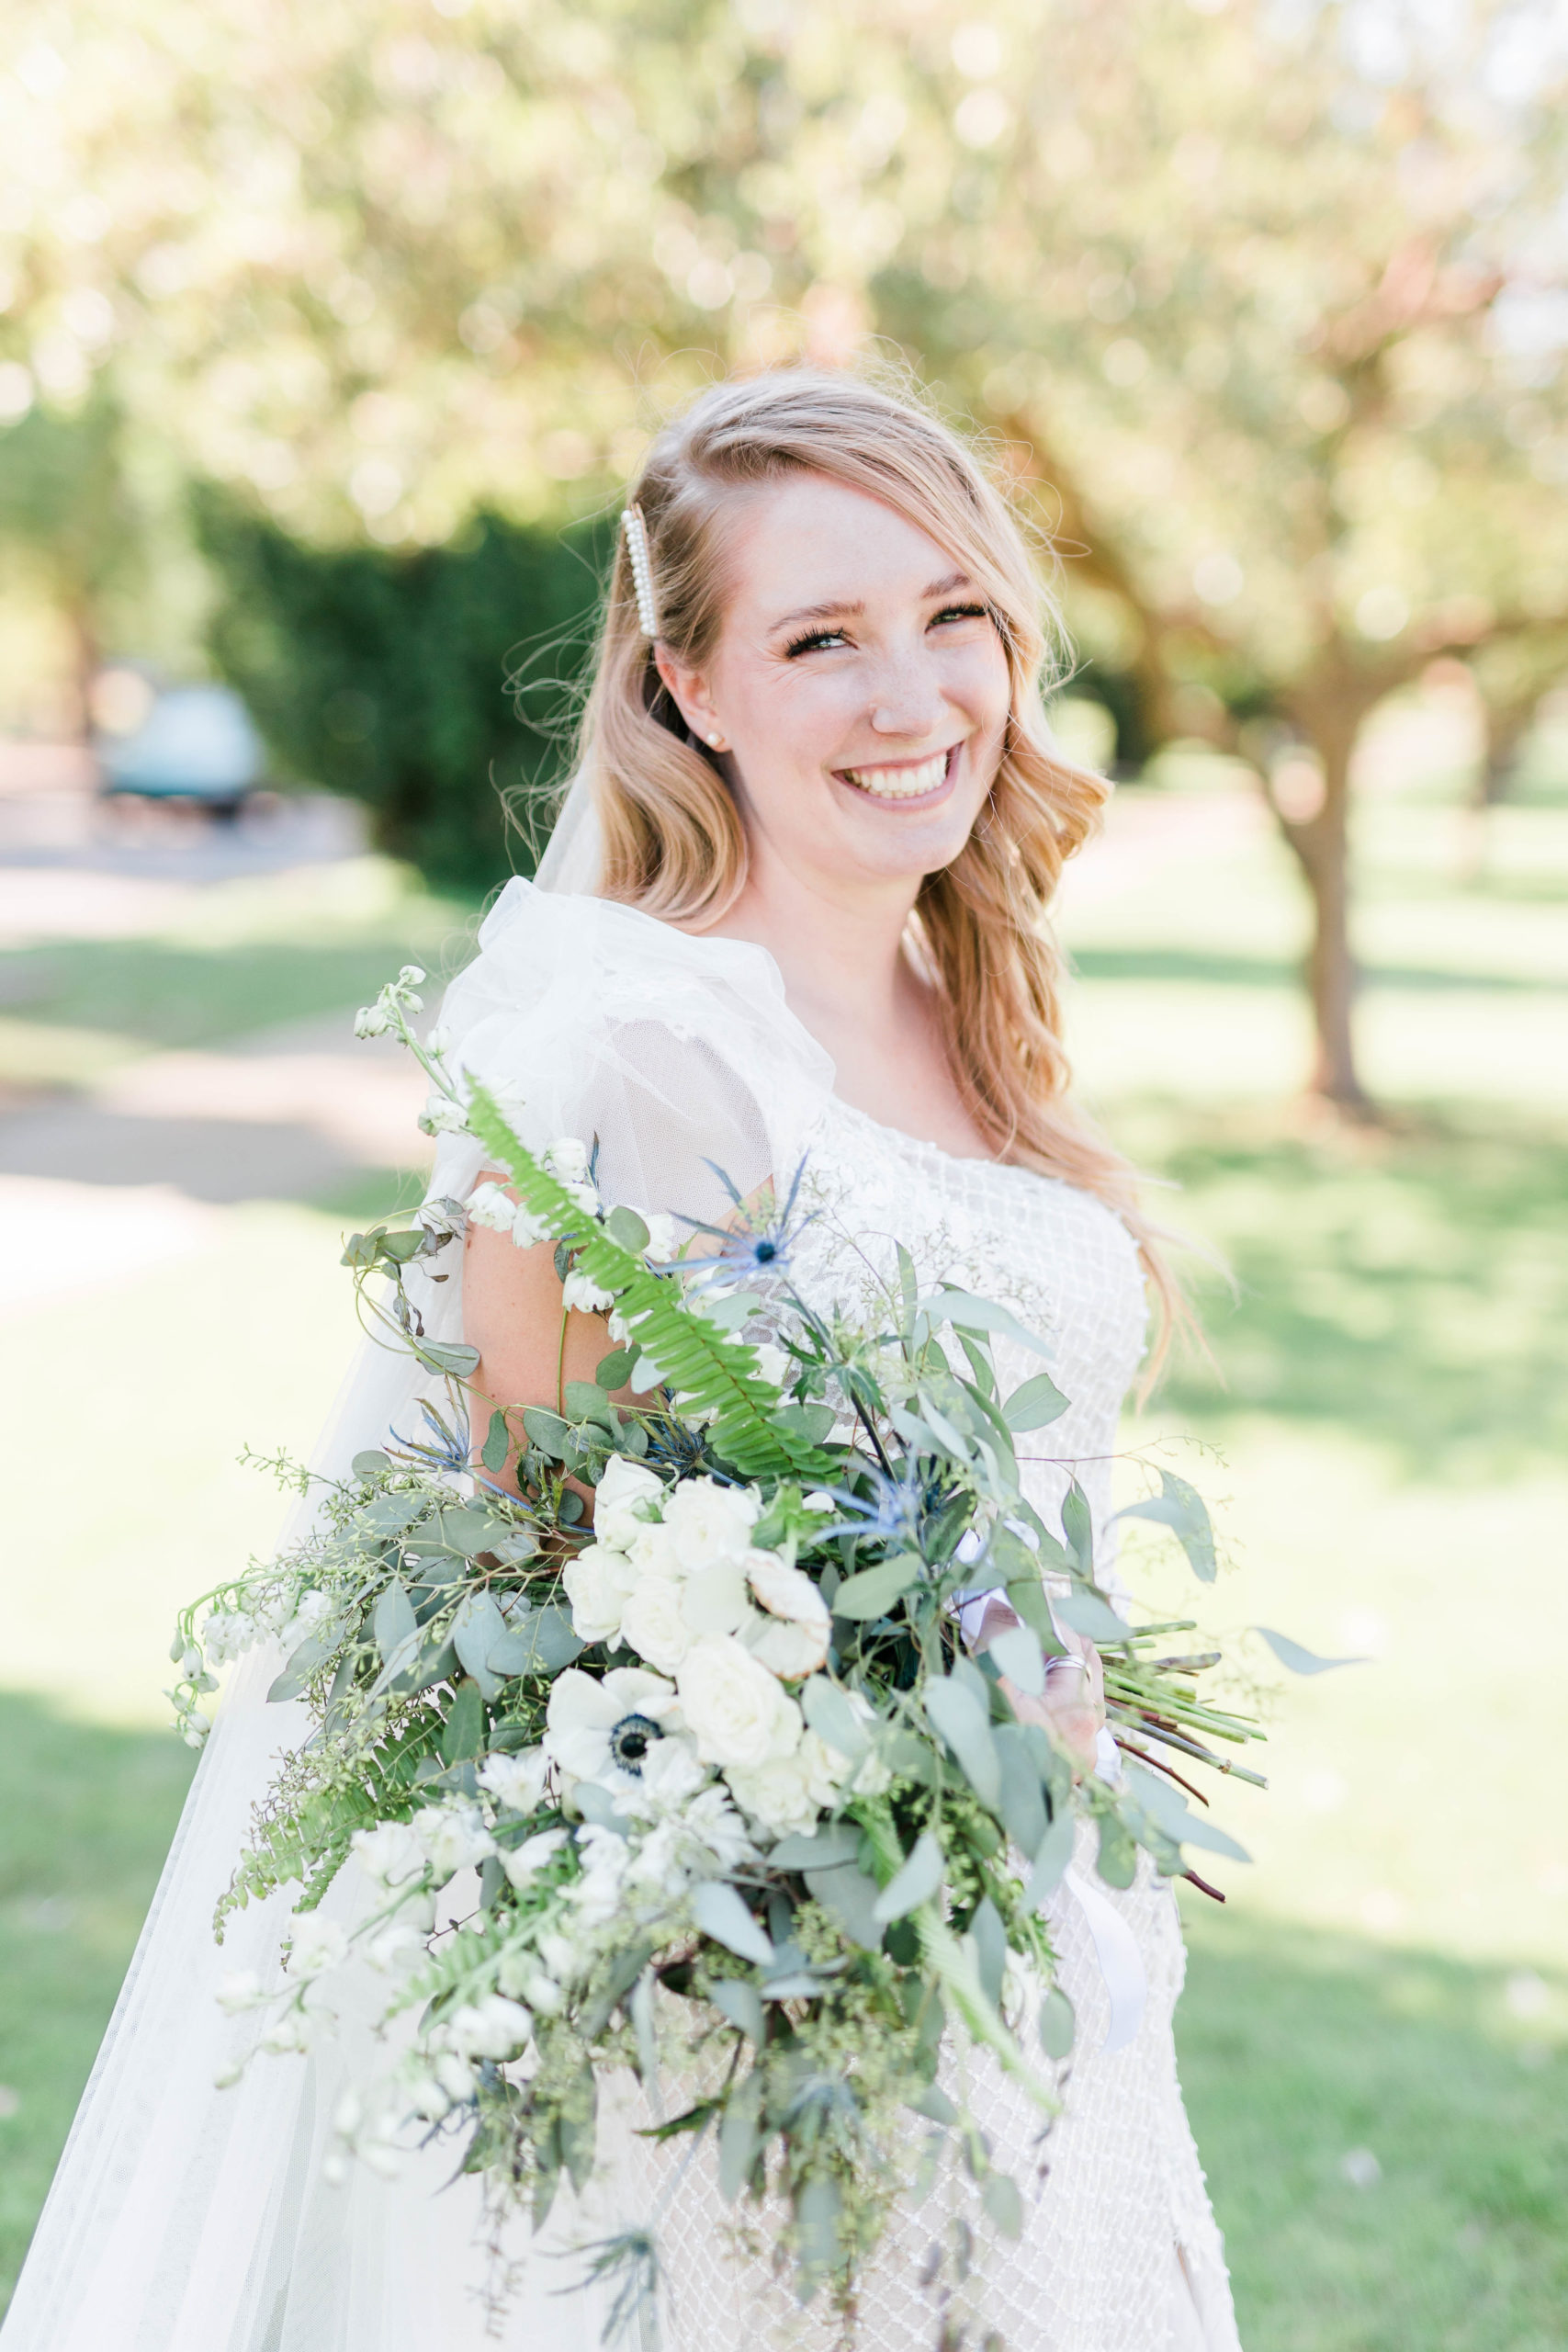 blonde bride holding an elegant wedding bouquet for her summer wedding